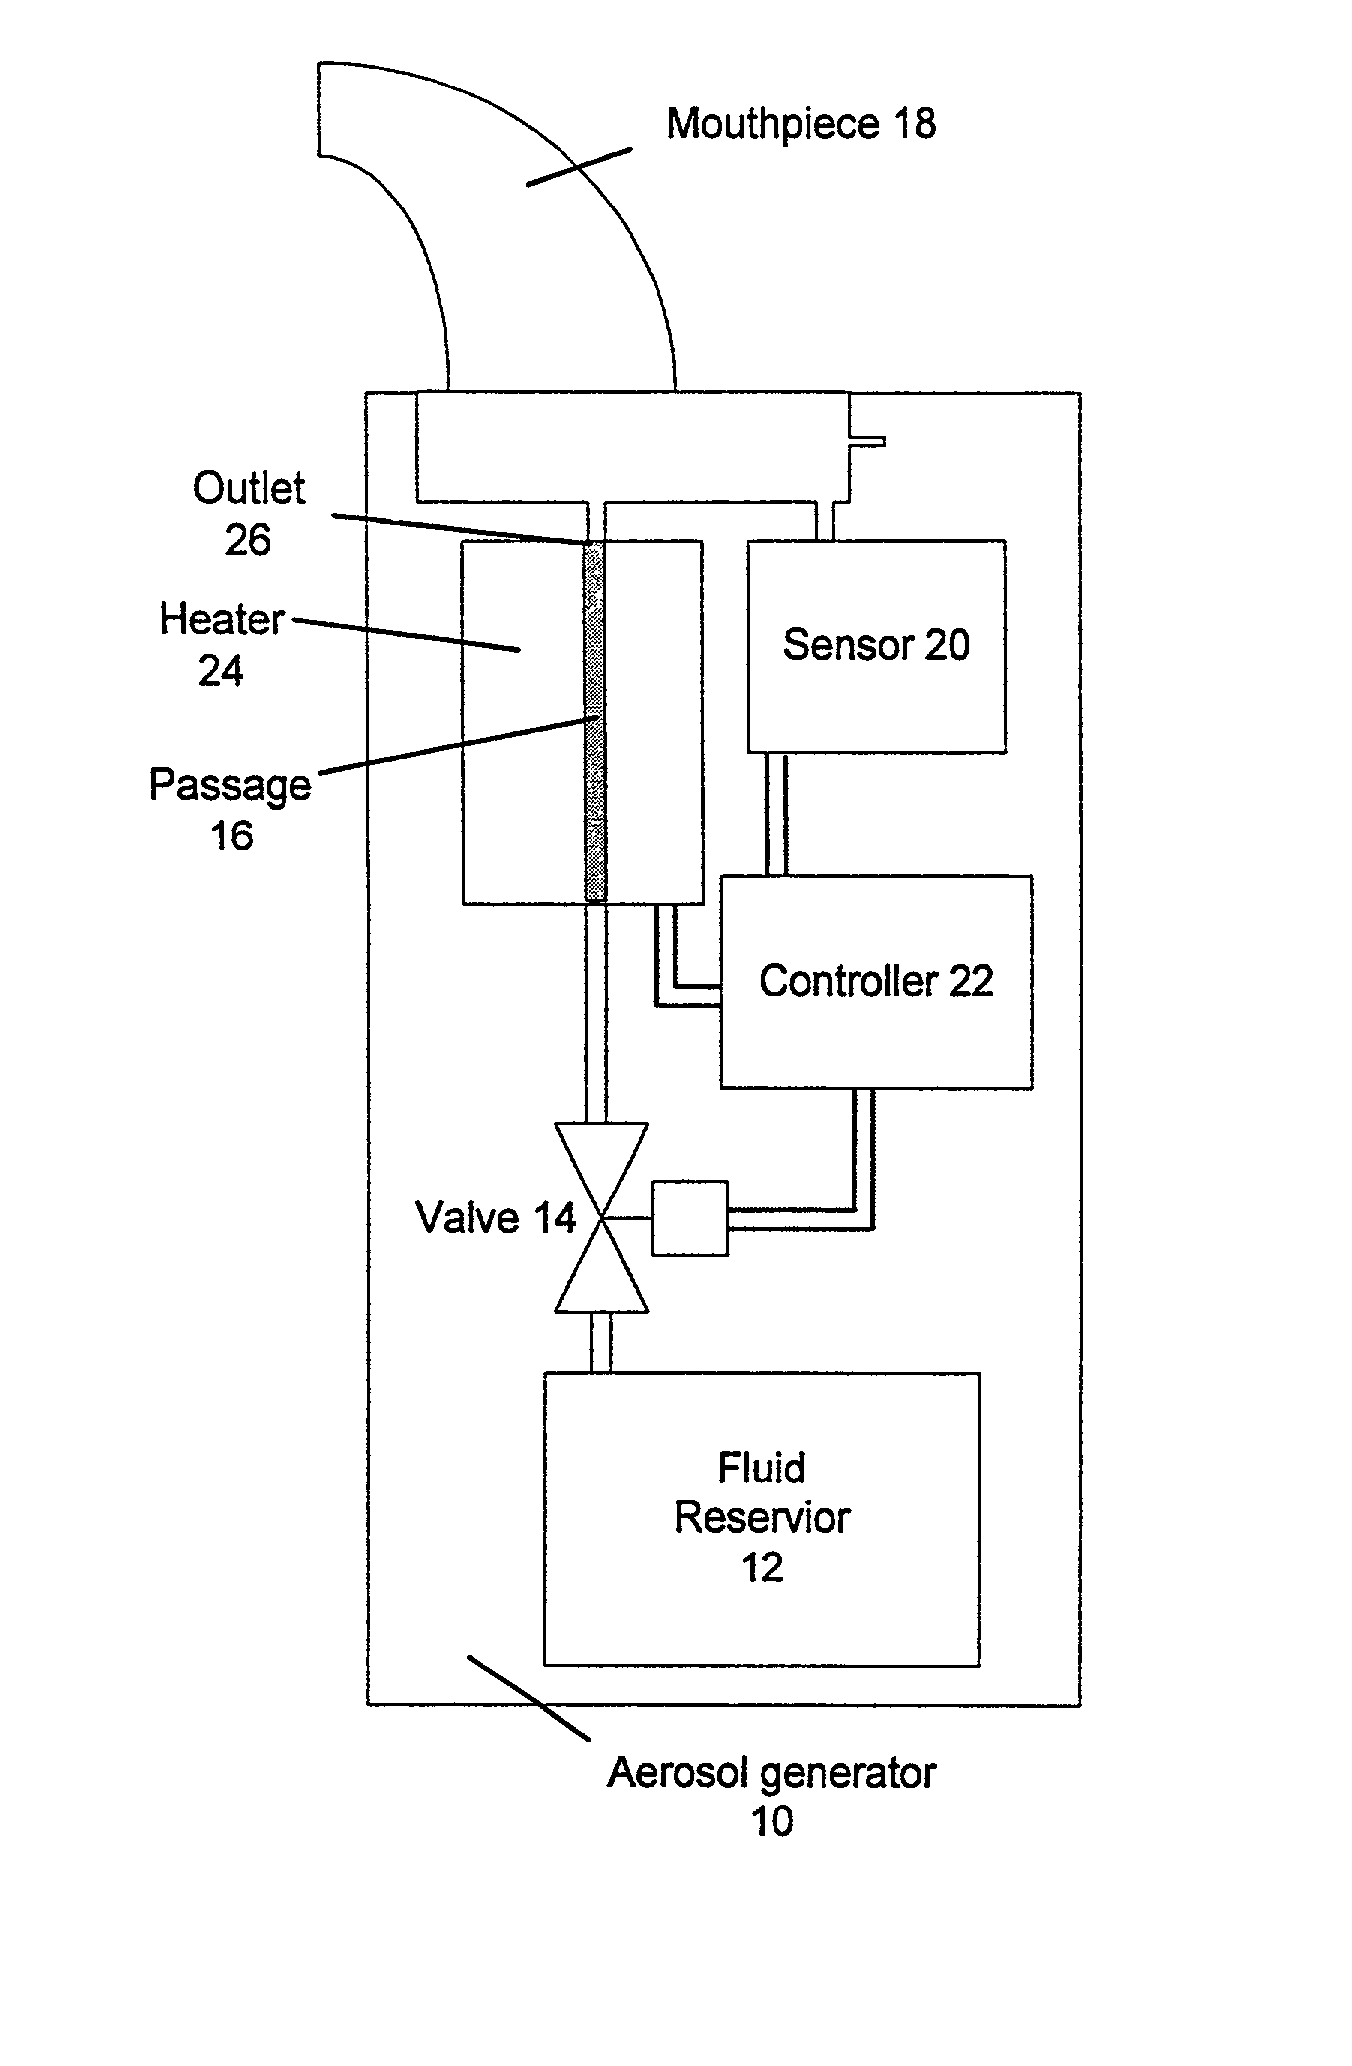 Aerosol generator having heater arranged to vaporize fluid in fluid passage between bonded layers of laminate